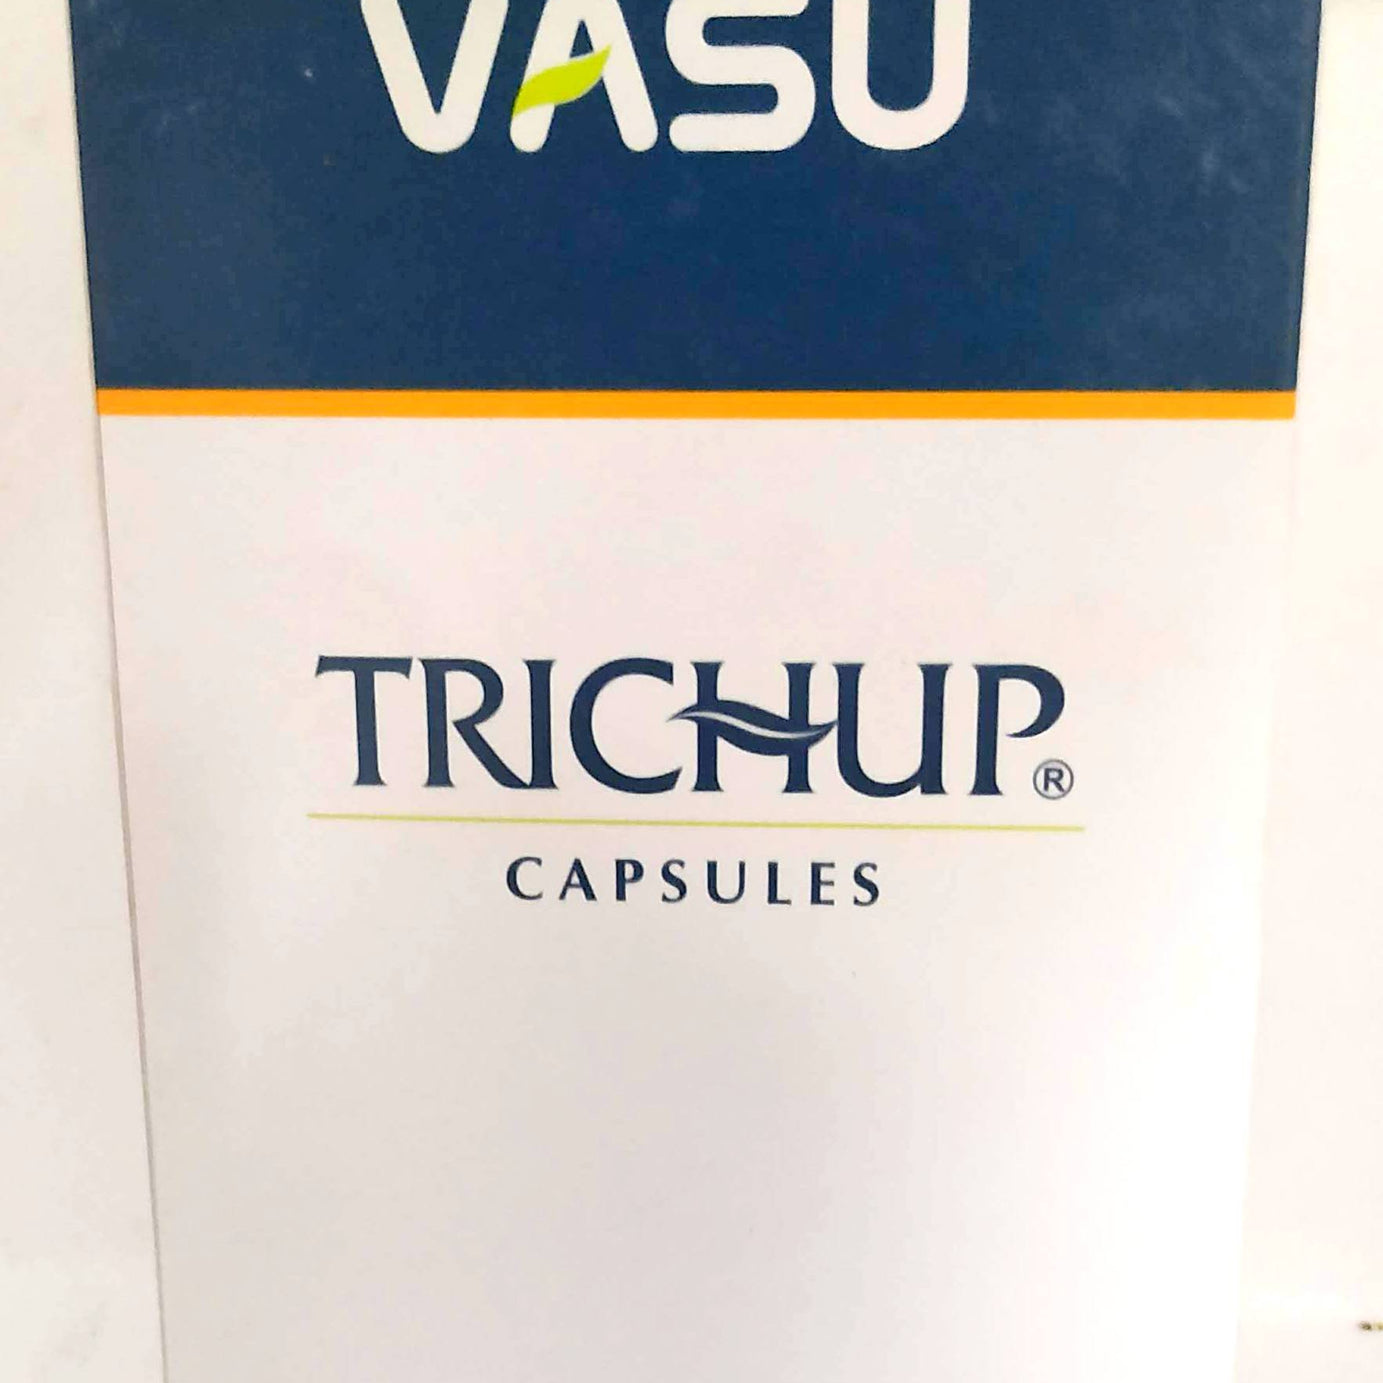 Shop Trichup capsules - 10Capsules at price 60.00 from Vasu herbals Online - Ayush Care